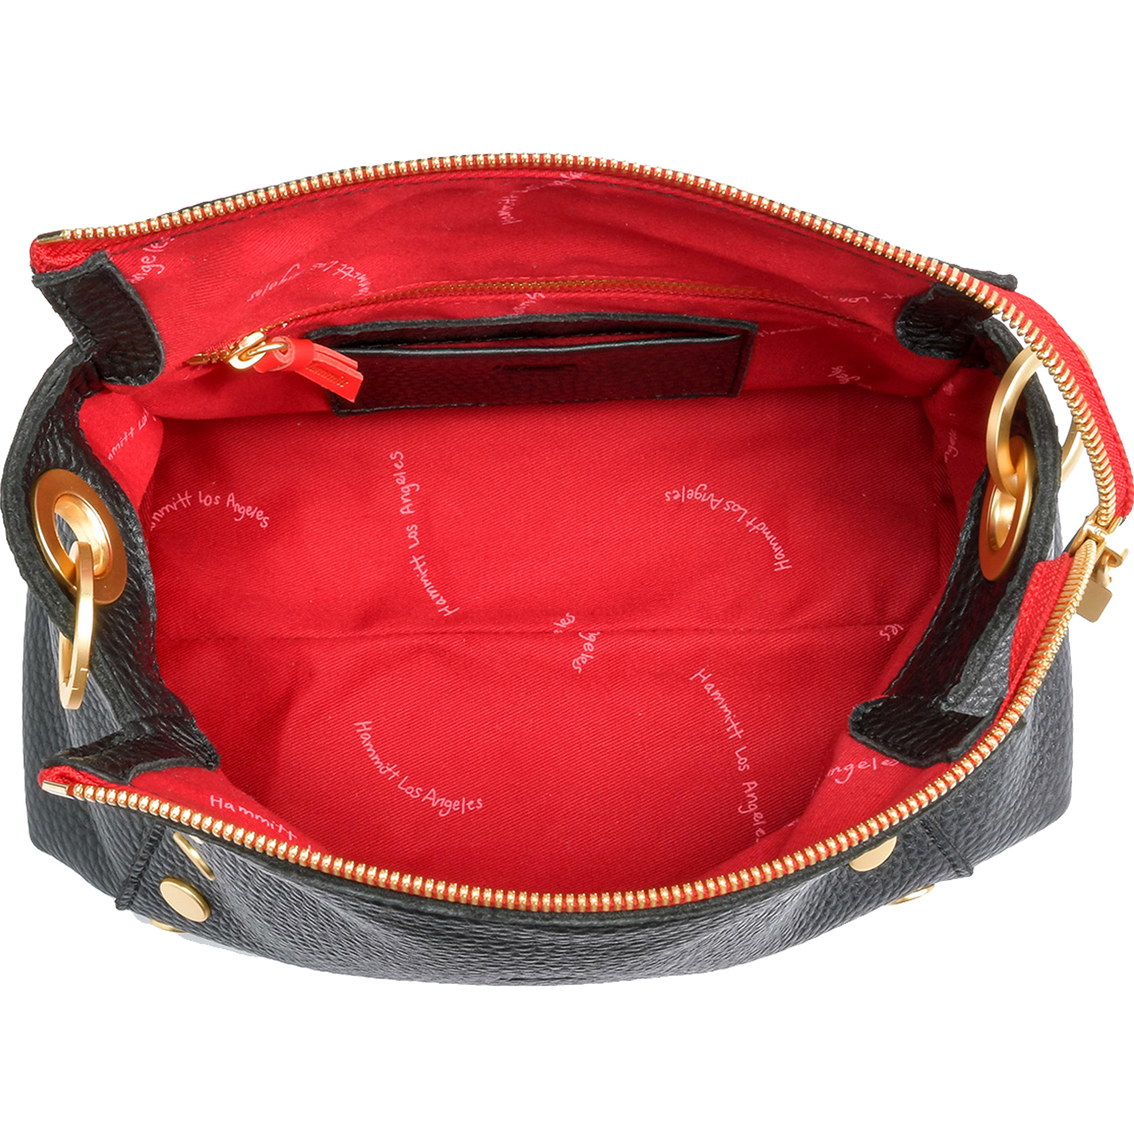 Hammitt Bryant Medium Handbag - Image 4 of 5